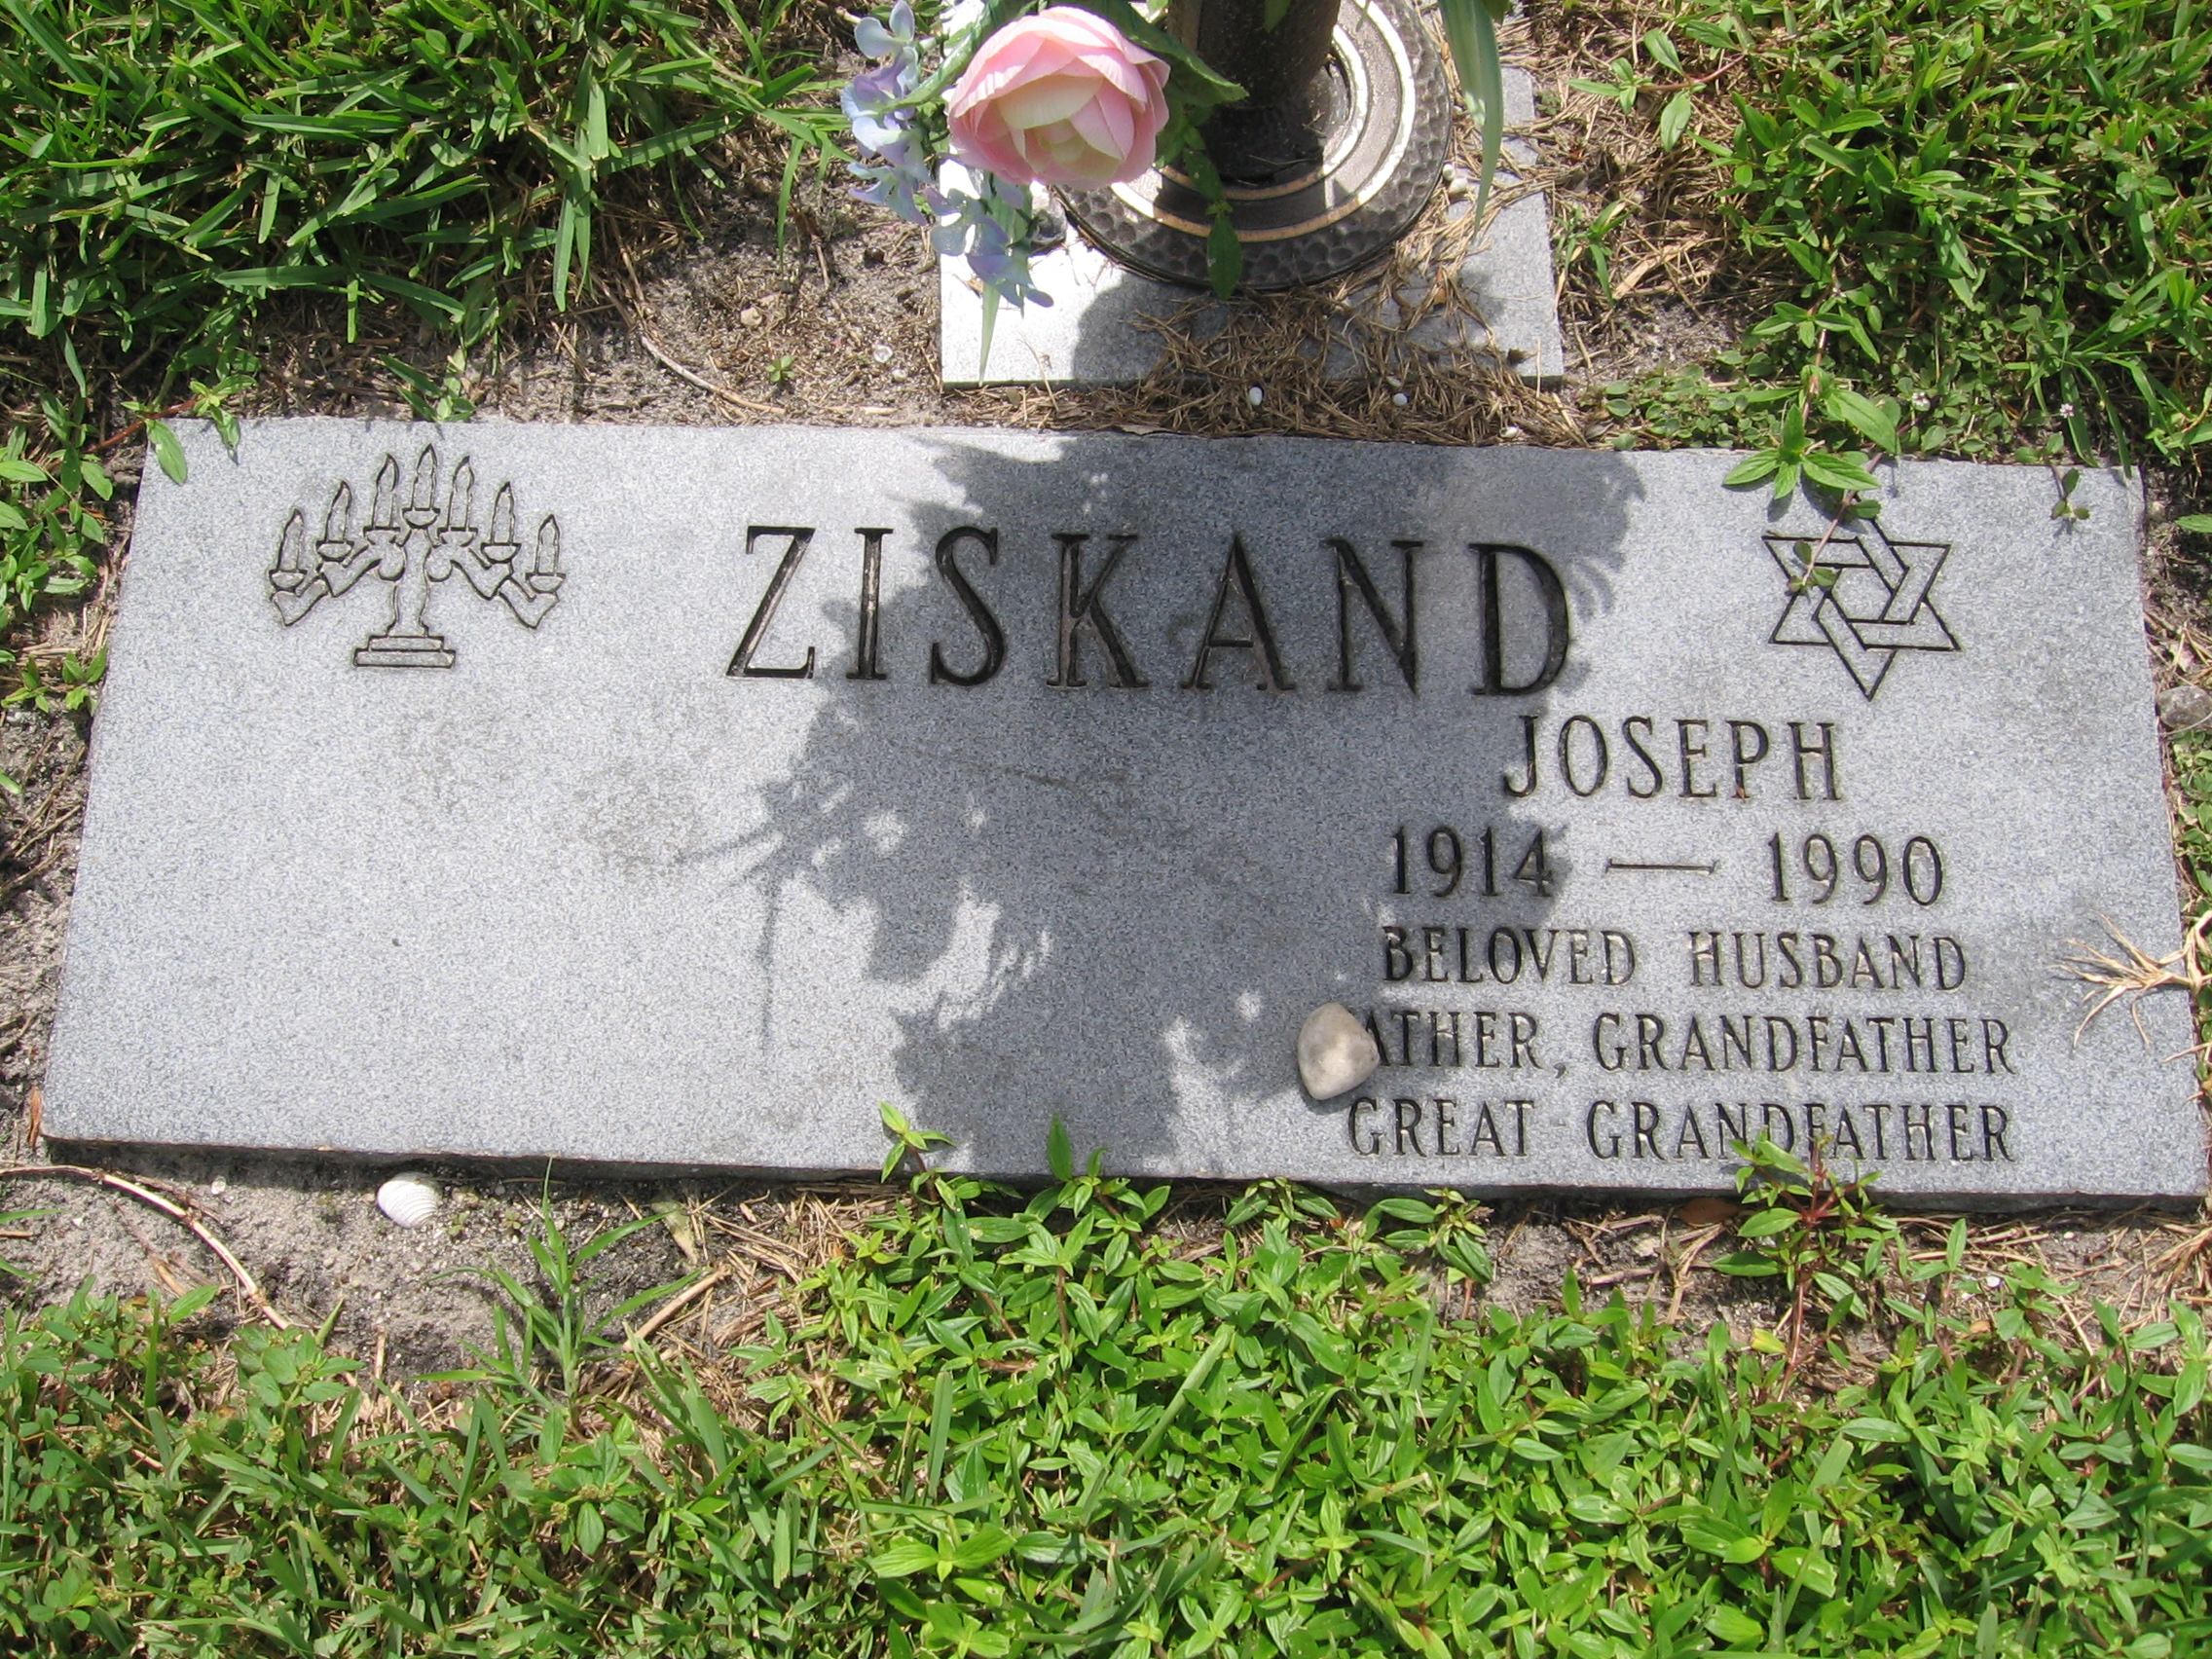 Joseph Ziskand